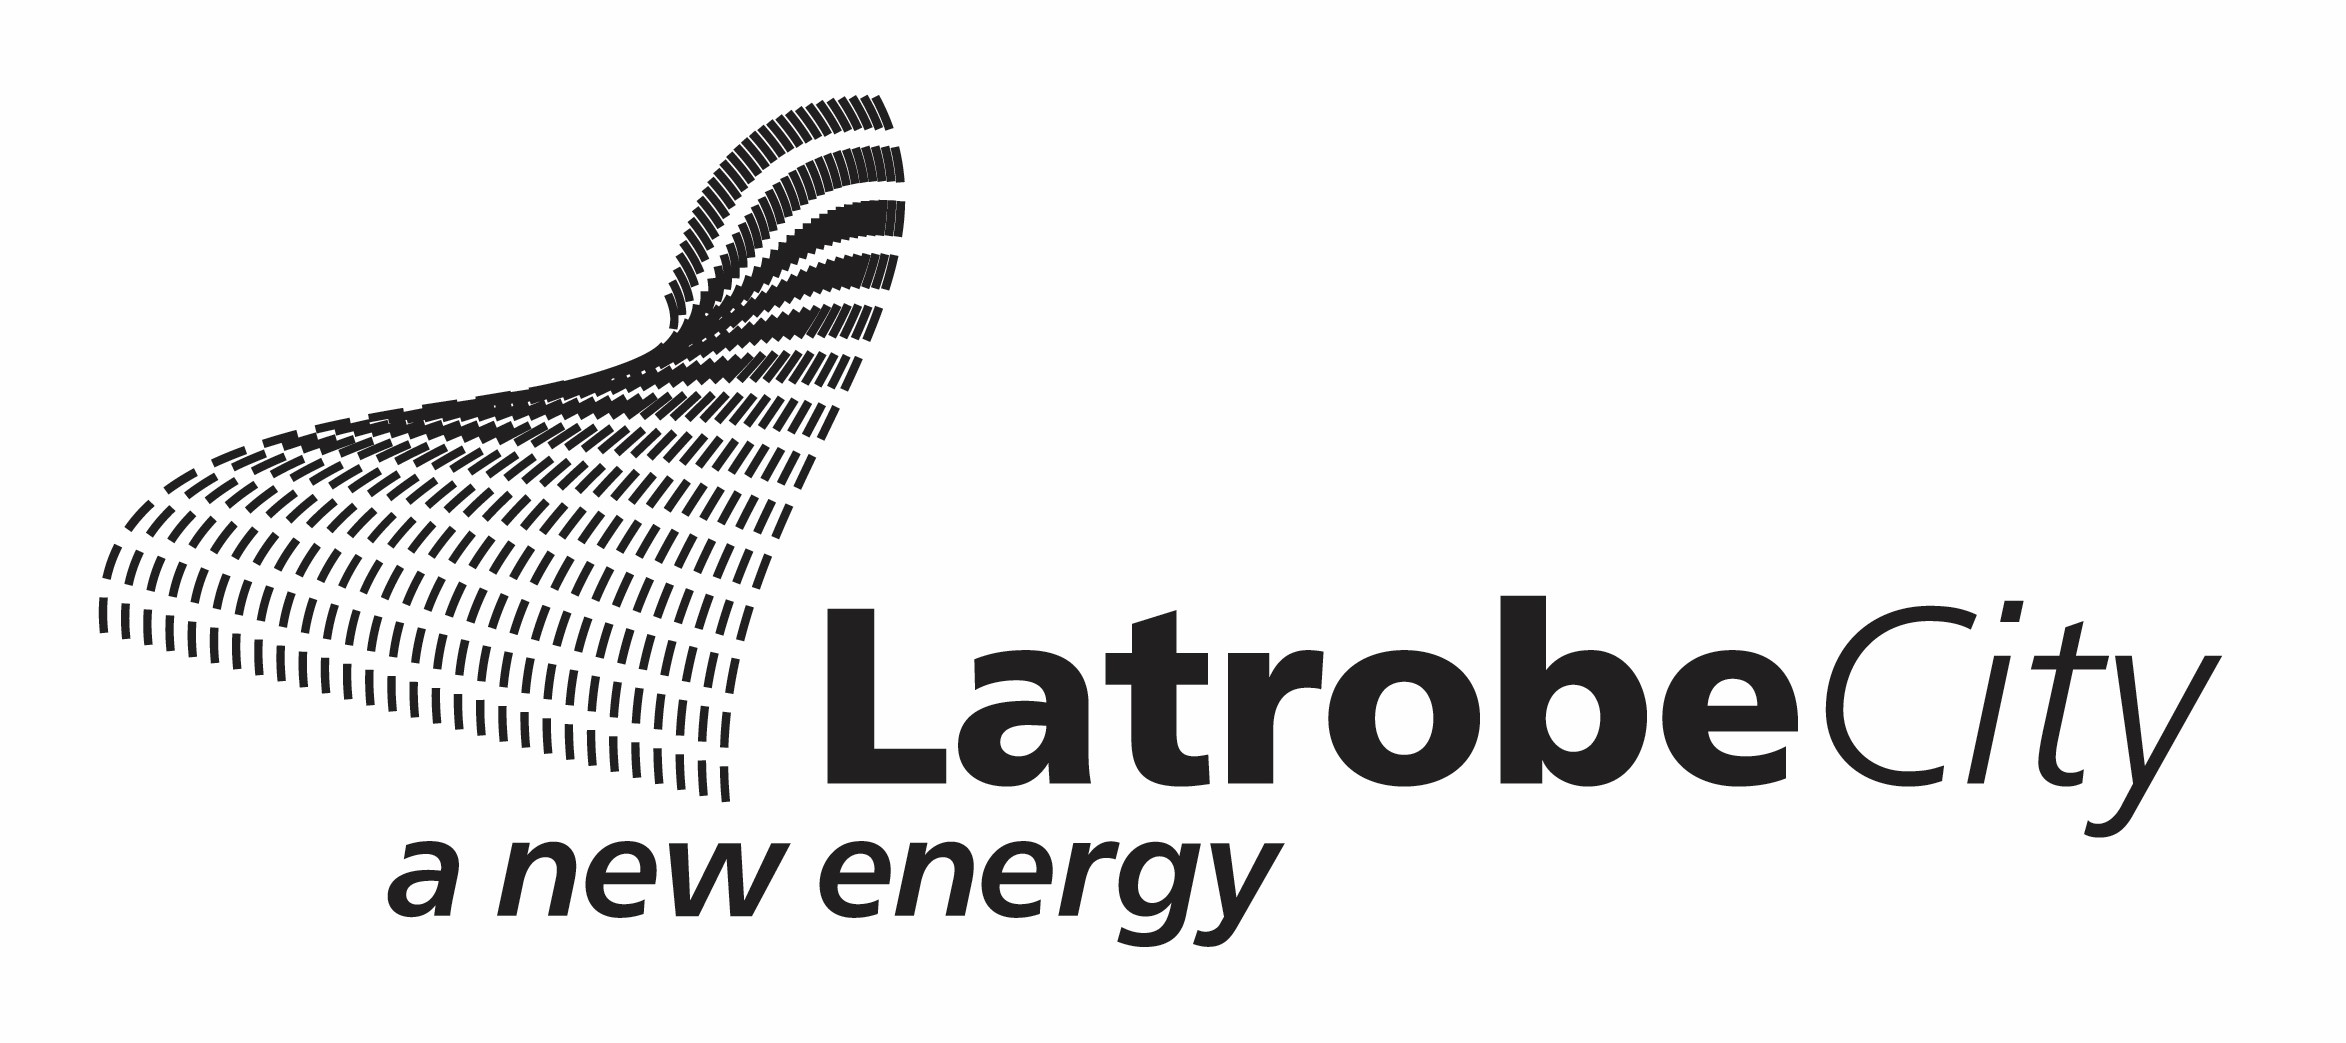 Latrobe City logo